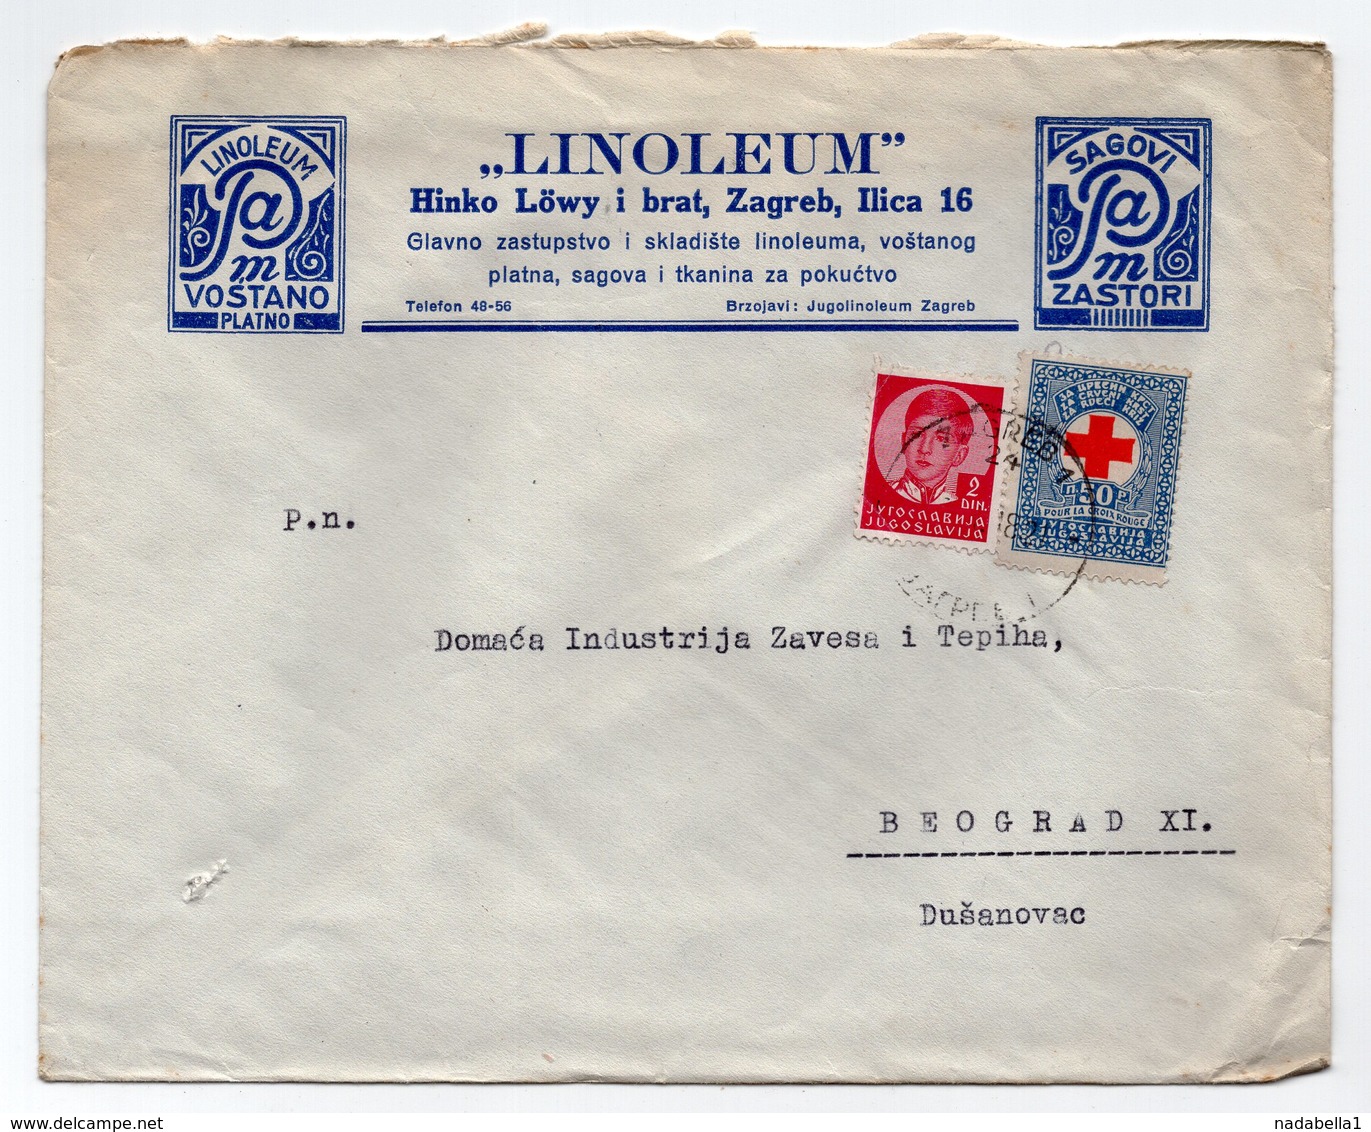 1938 YUGOSLAVIA, CROATIA, ZAGREB TO BELGRADE, LINOLEUM, HINKO LOWY & BROTHER, COMPANY LETTERHEAD COVER, RED CROSS STAMP - Covers & Documents